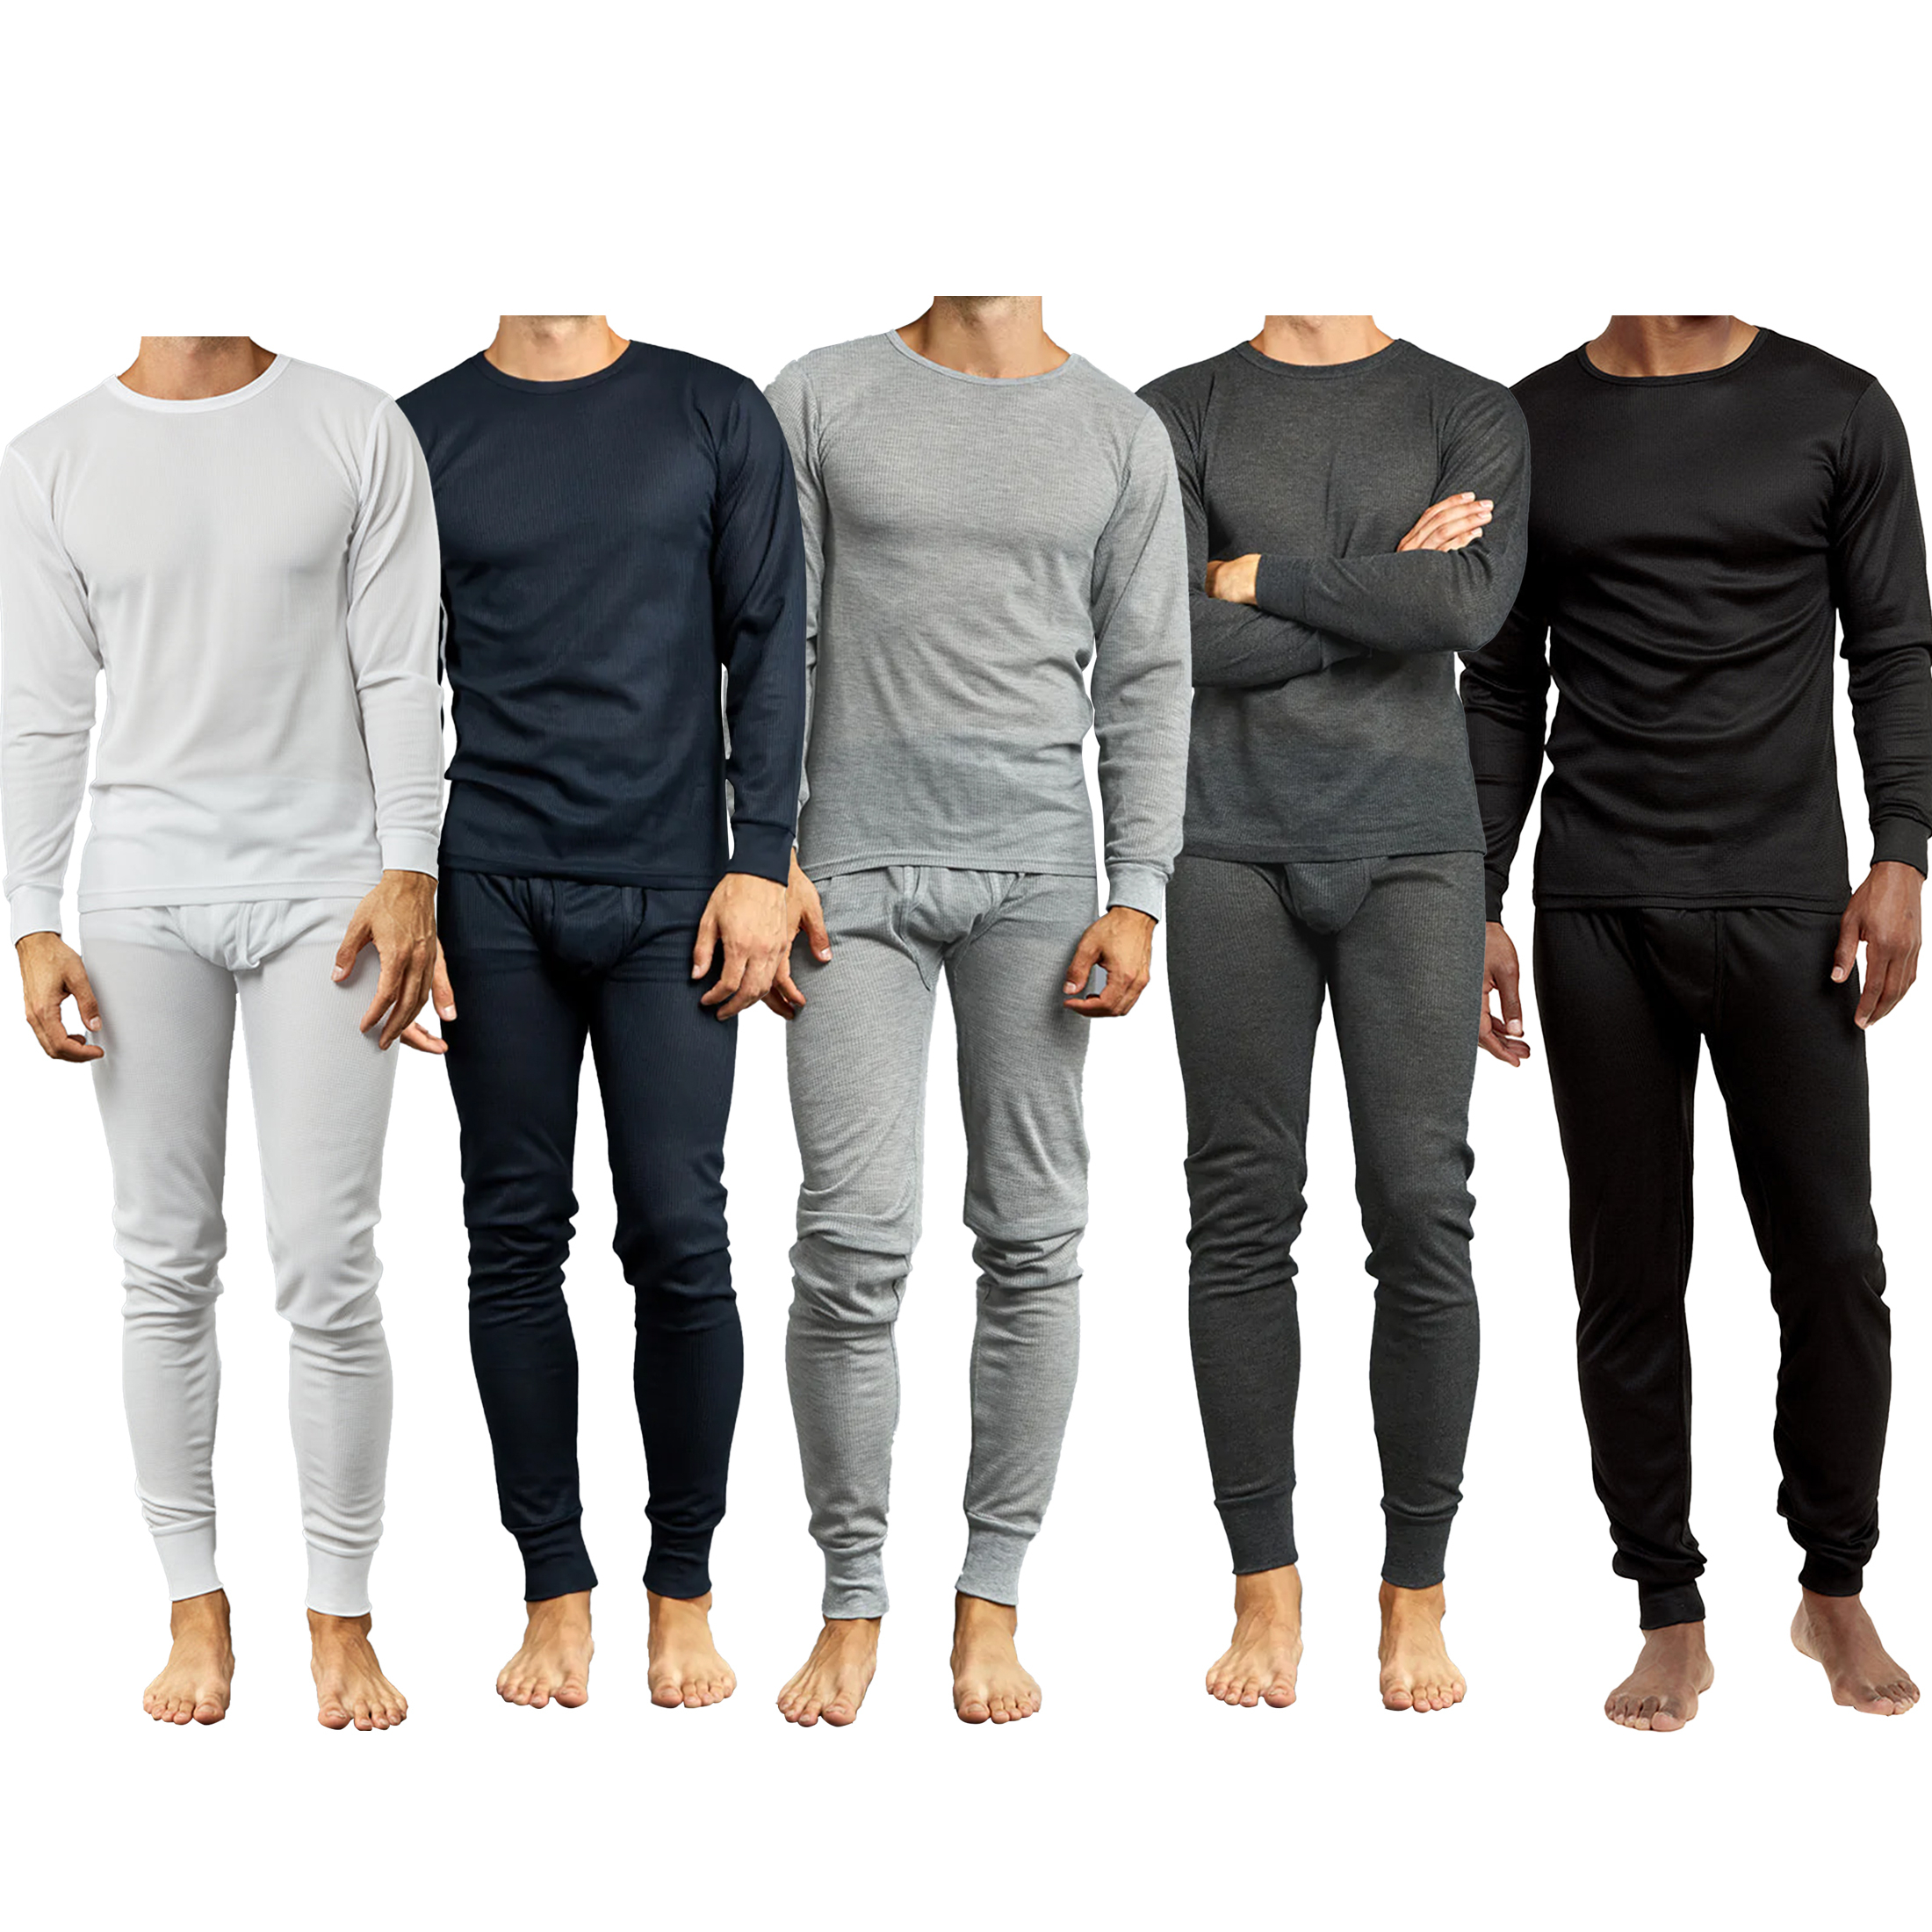 2-Piece: Men's Moisture Wicking Long Johns Base Layer Thermal Underwear Set (Top & Bottom) - Black, Small